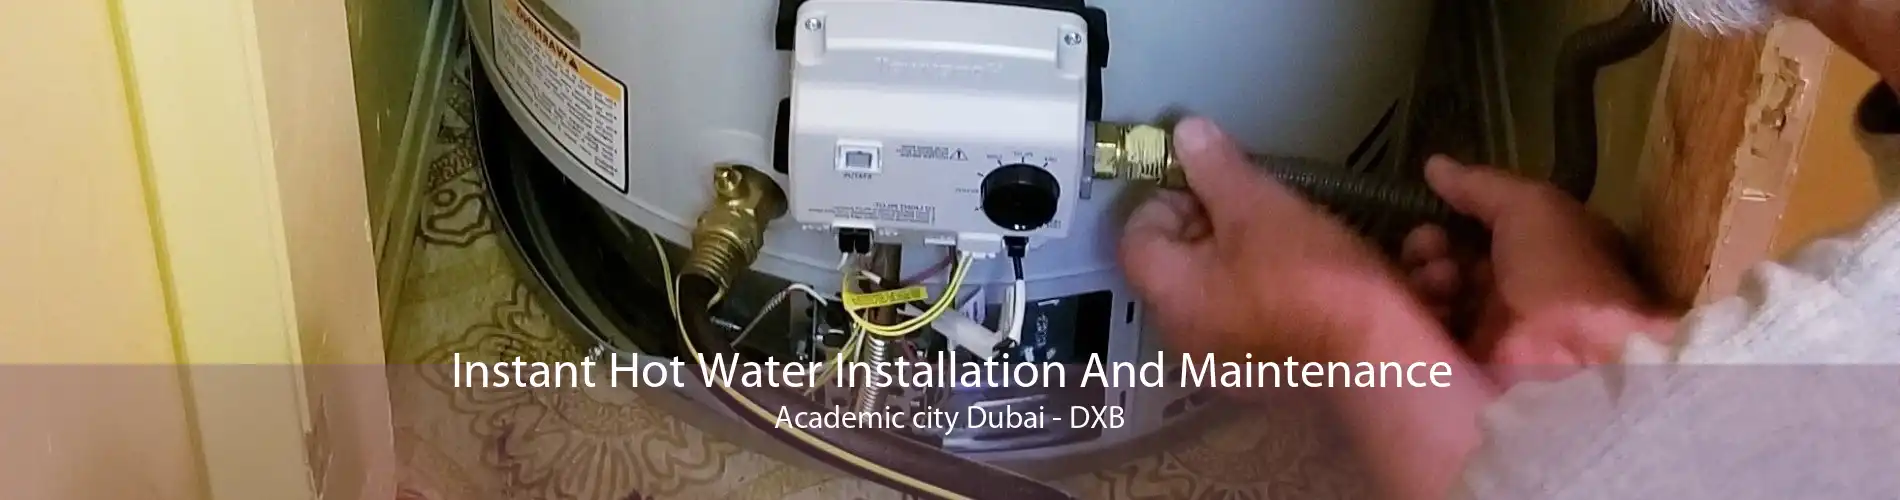 Instant Hot Water Installation And Maintenance Academic city Dubai - DXB